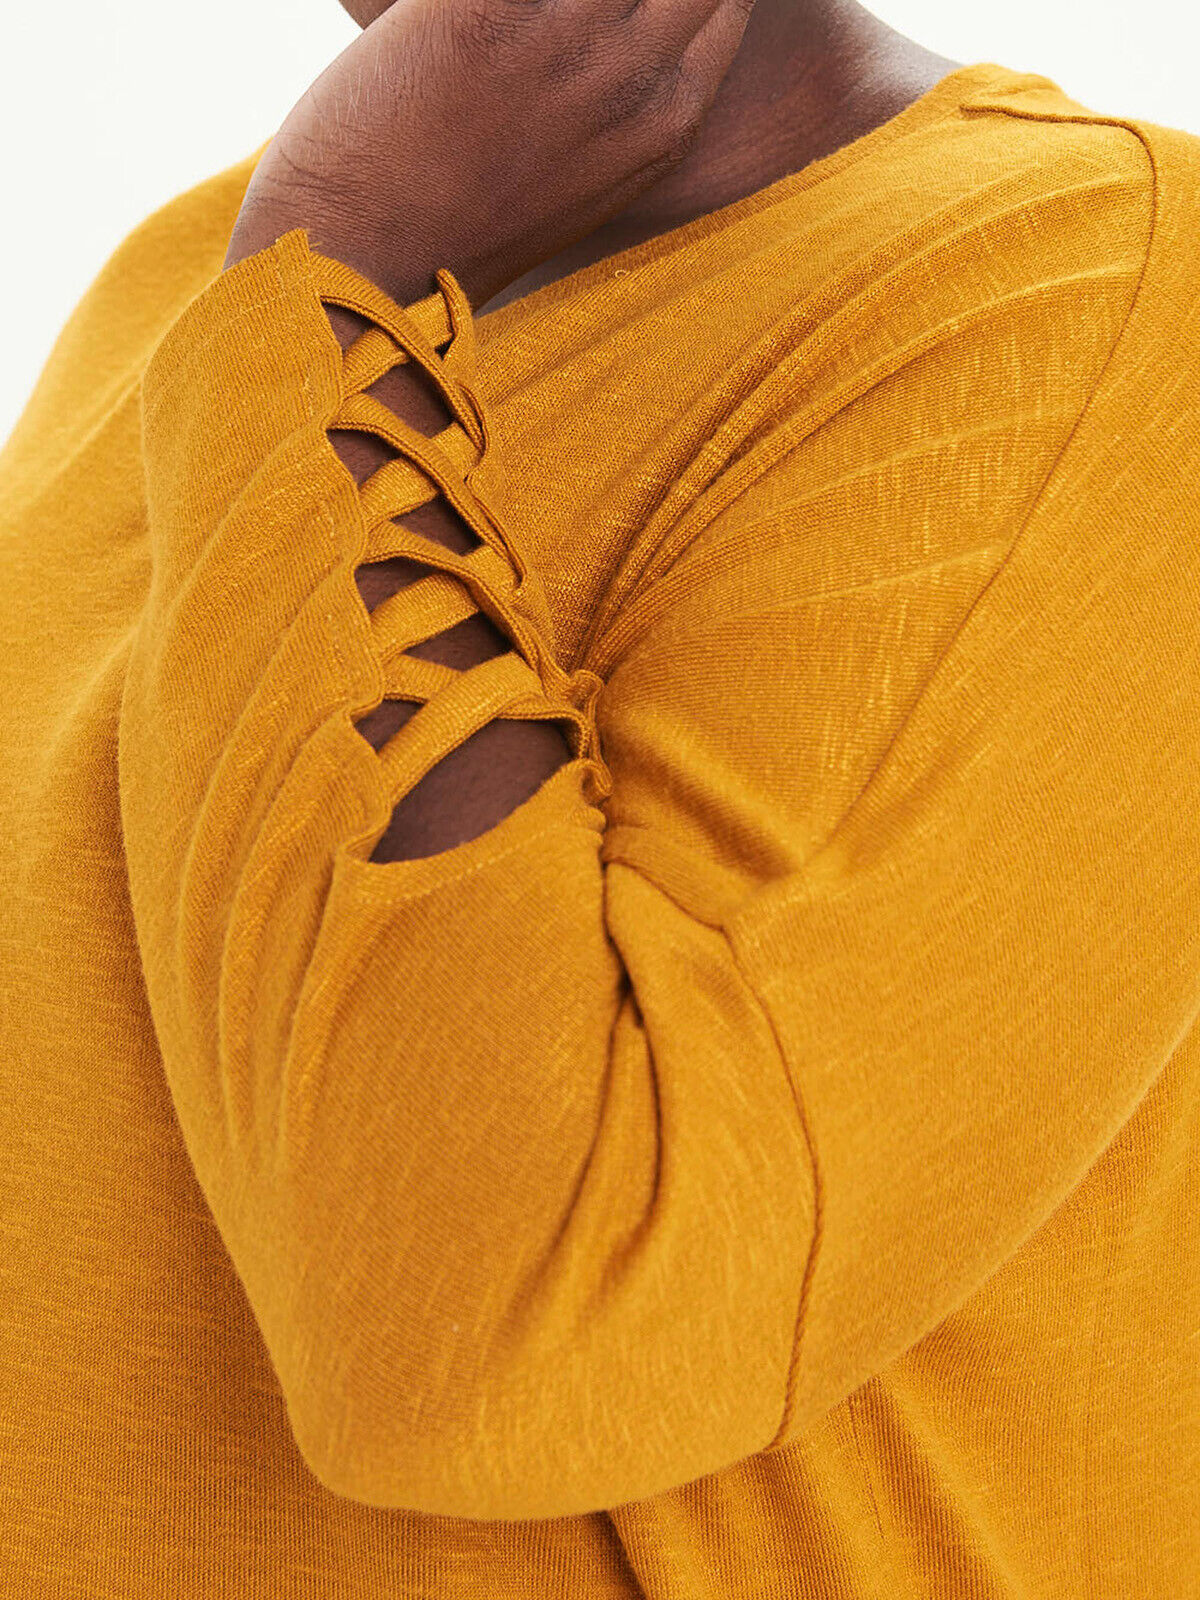 Papaya Curve Gold Long Sleeve OVERSIZE Lattice Sleeve Tunic Top in Size 18